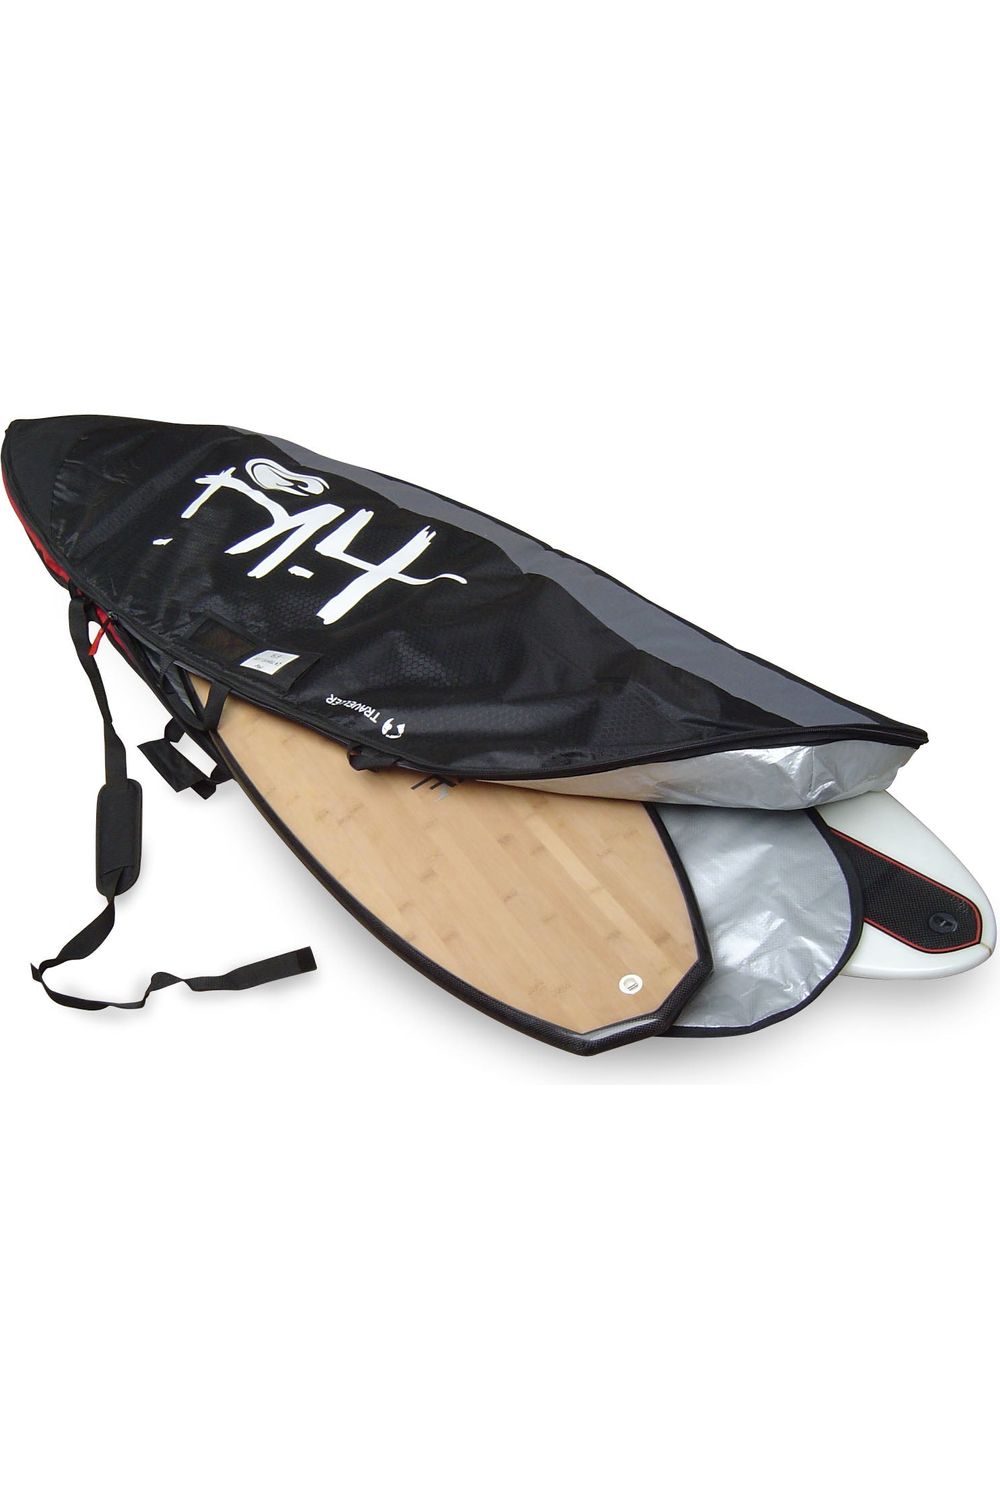 7'9 Travel Fun Surfboard Bag MkII